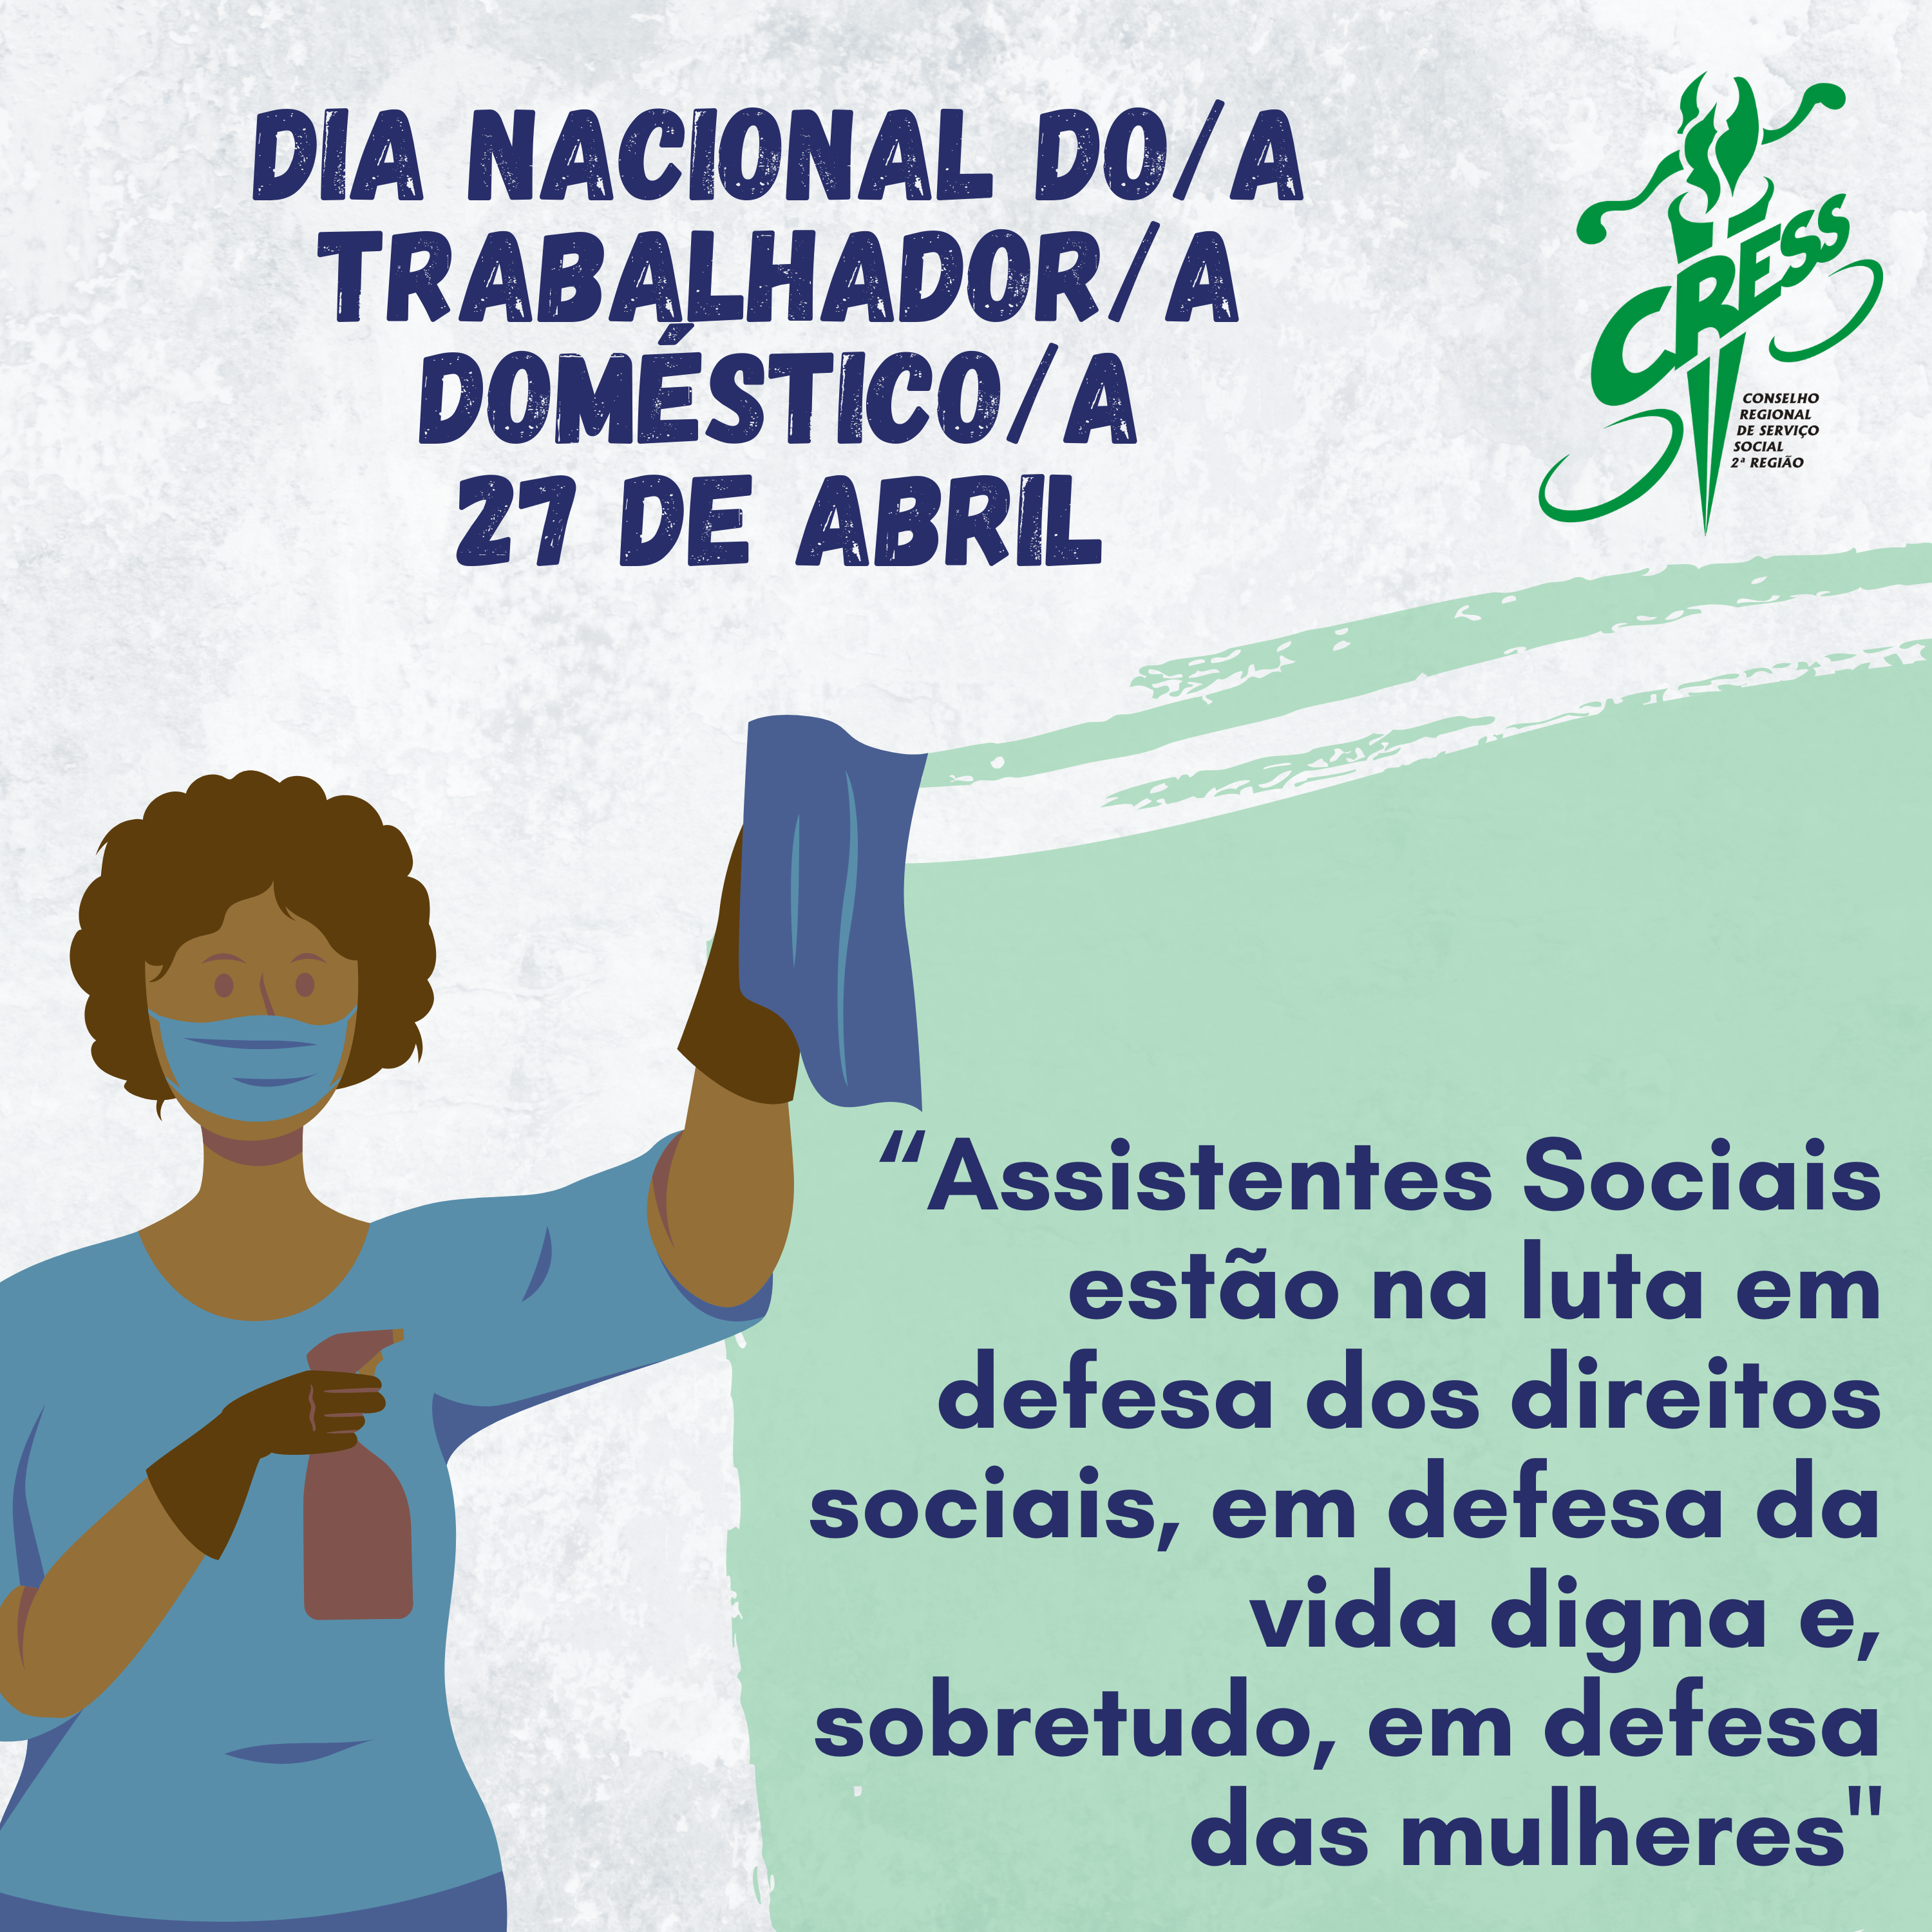 Dia Nacional doa Trabalhadora Domésticoa – 27 de abril (3)